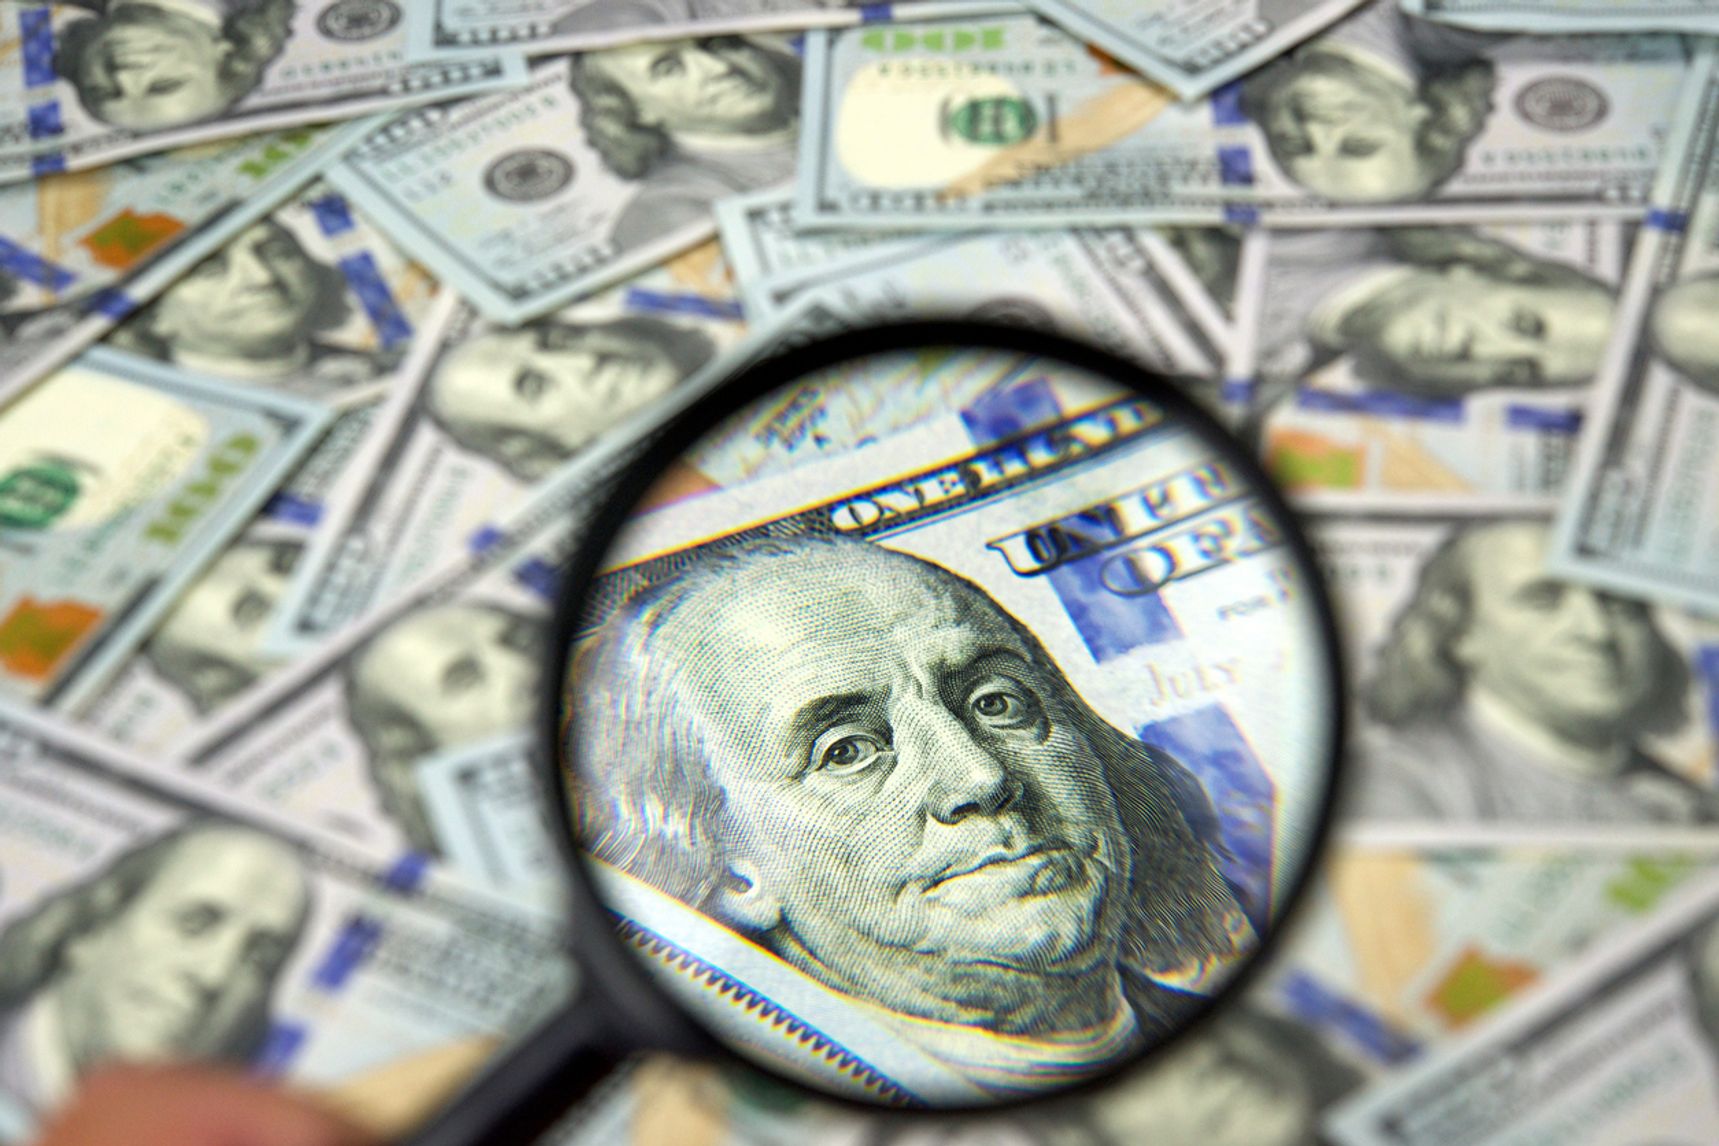 $100 bills magnifying glass on Ben Franklin